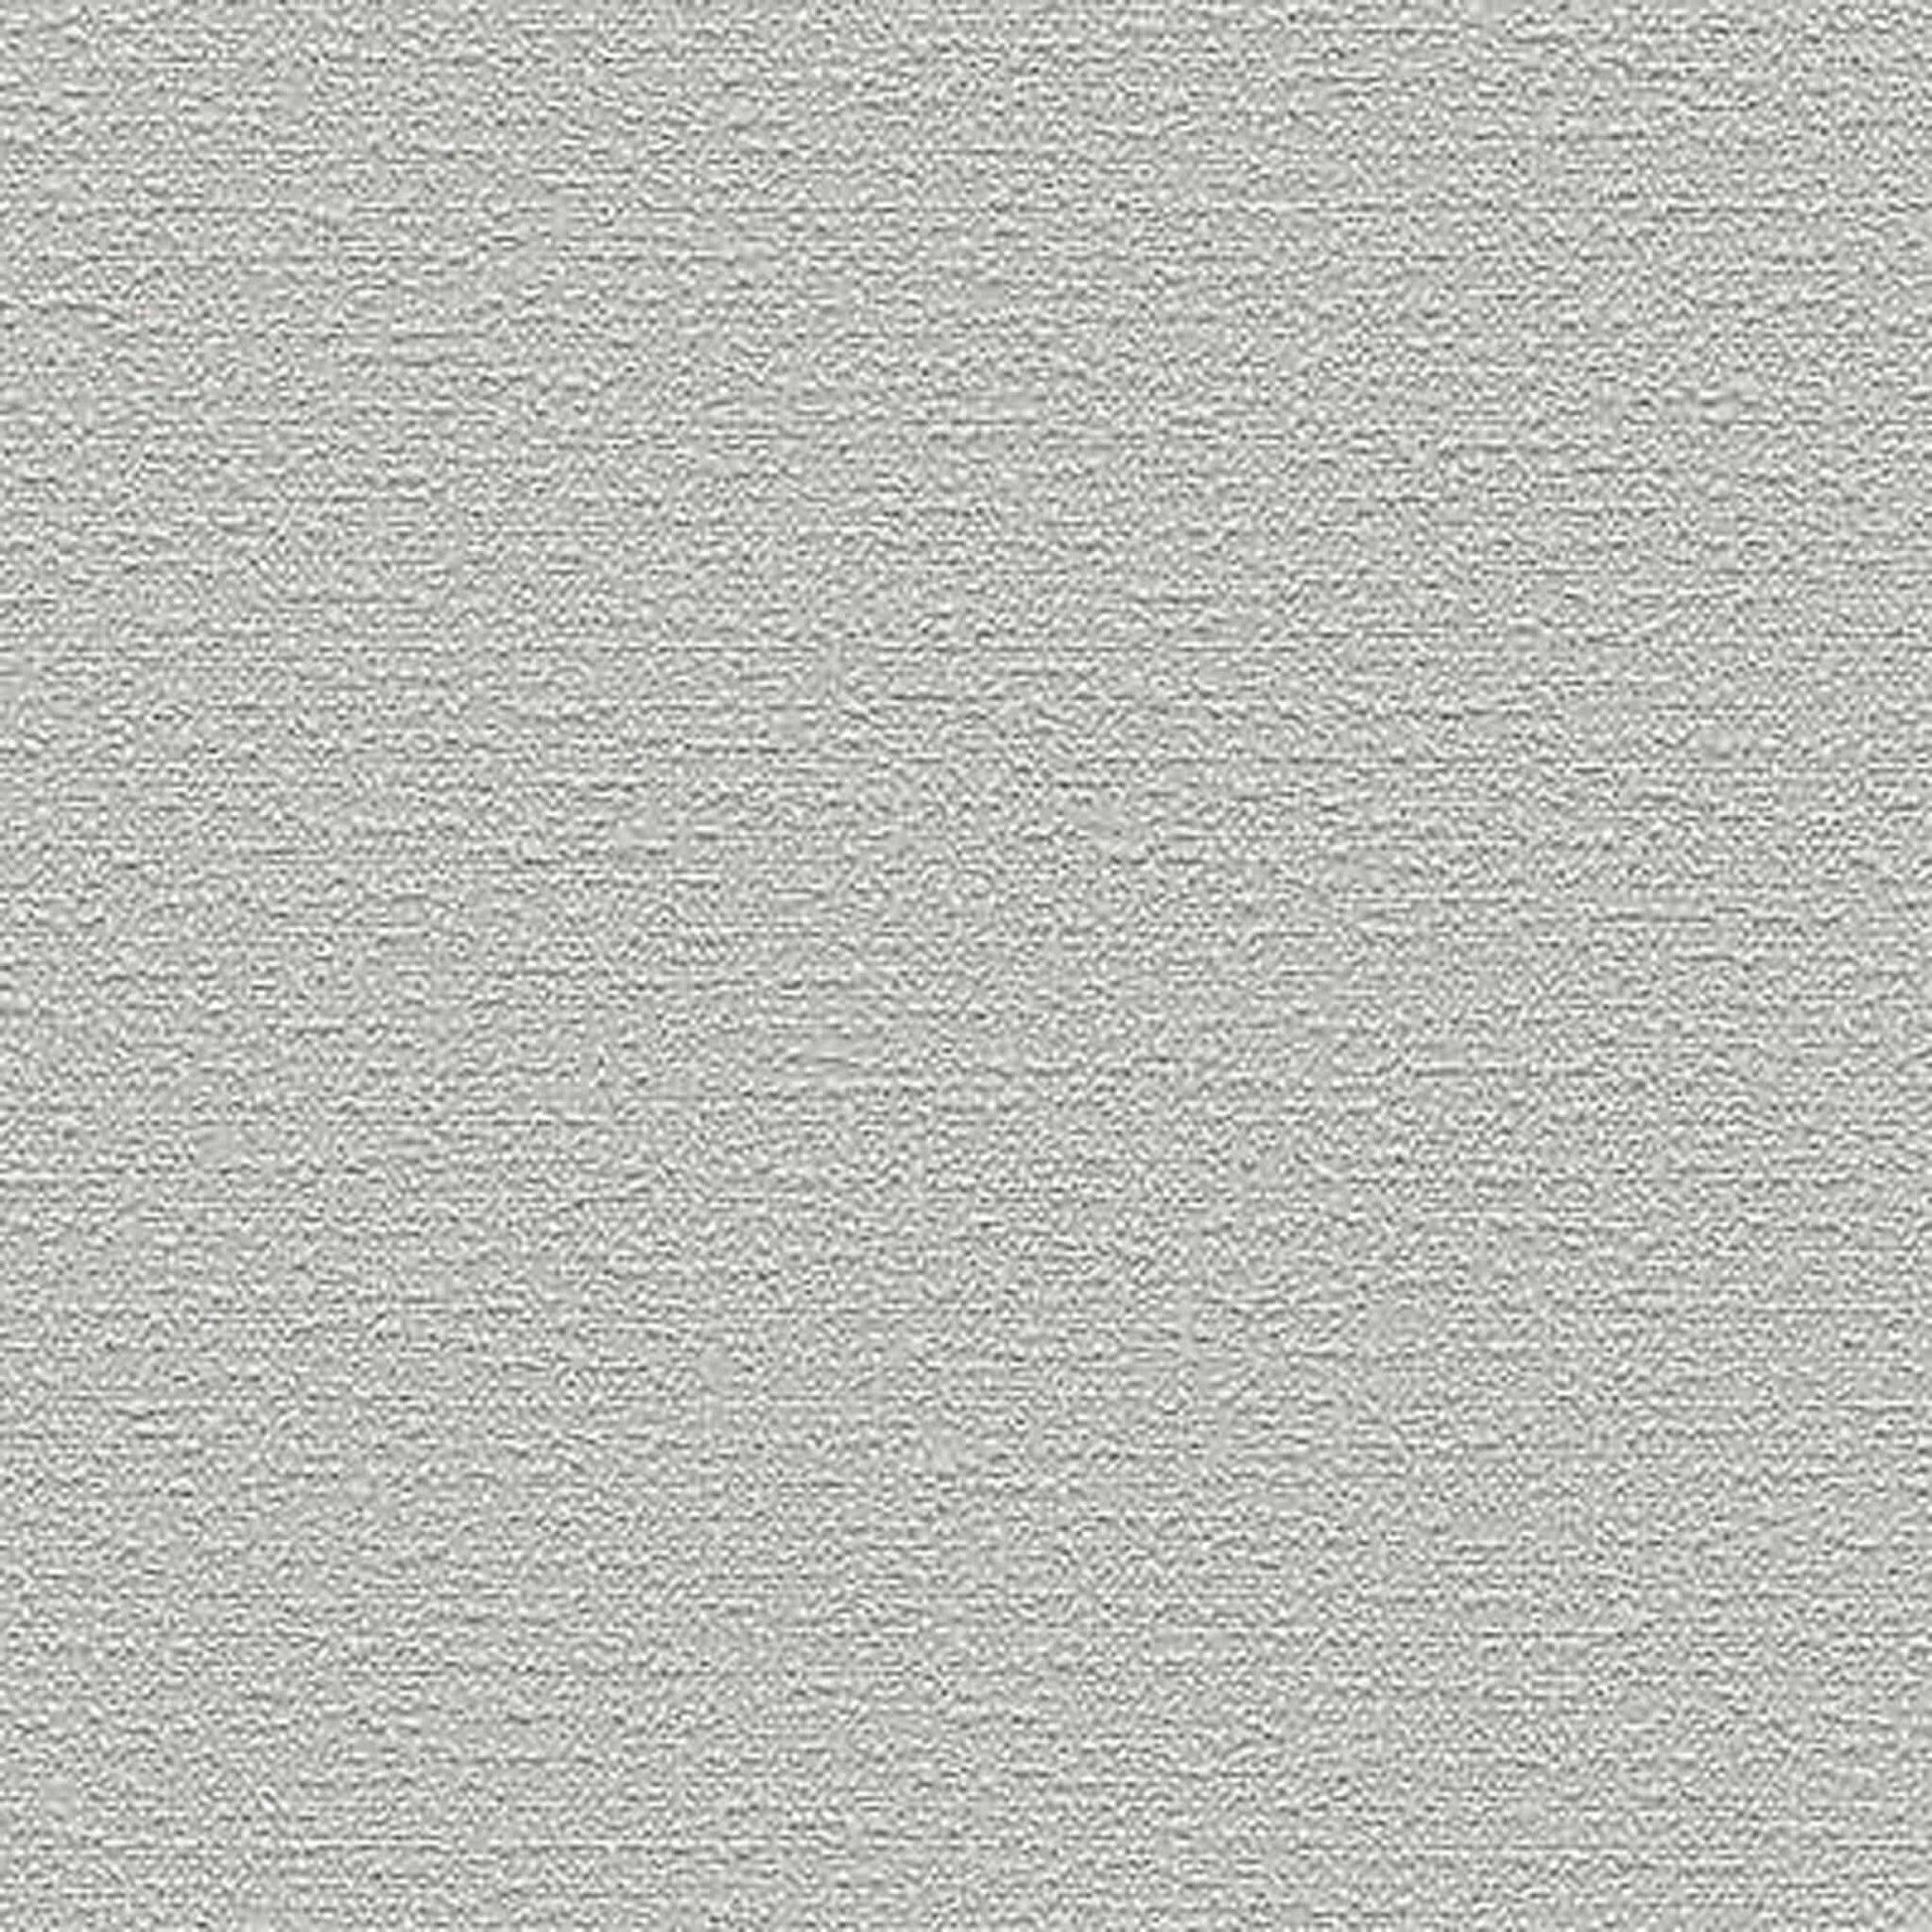 Wallpaper  -  AS Creations Grey Hessian Effect Blown Wallpaper - 709608  -  50154590